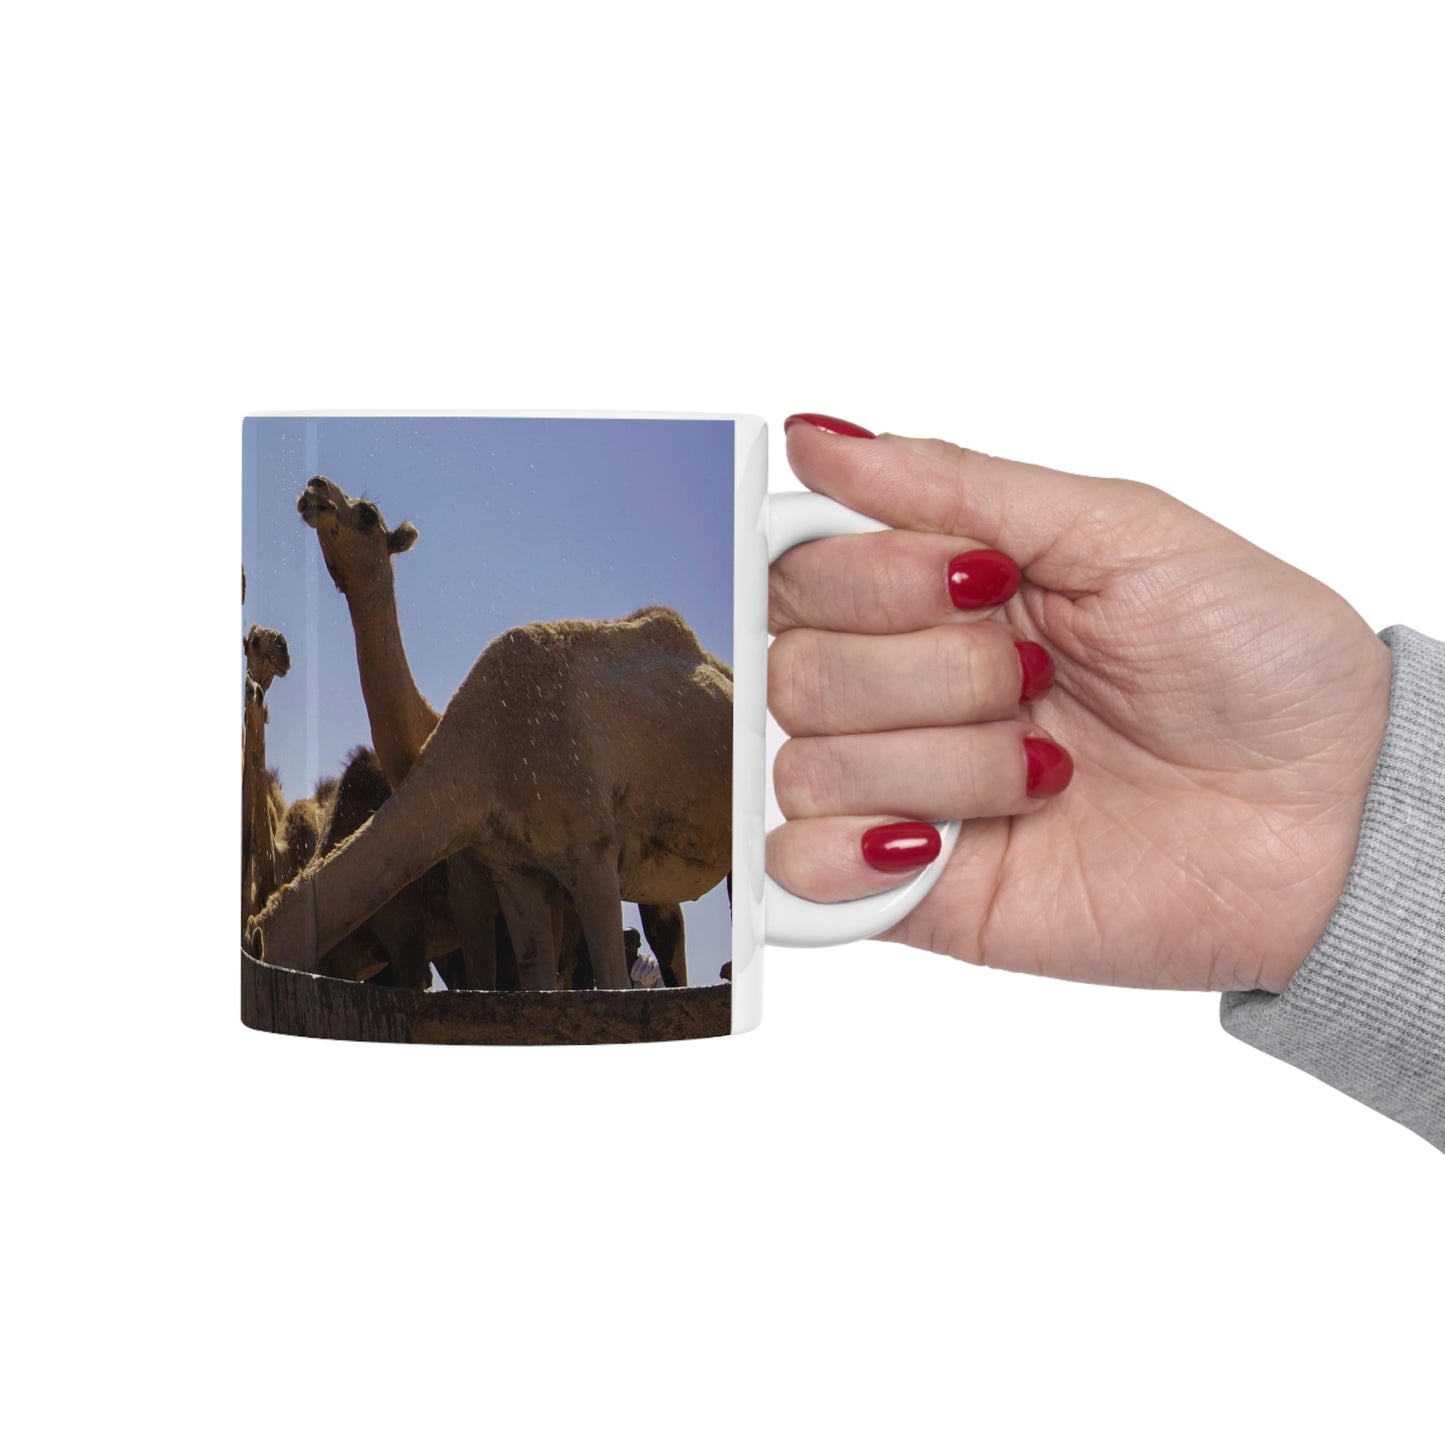 Ceramic Mug 11oz - Camels by Abdilaahi Persia